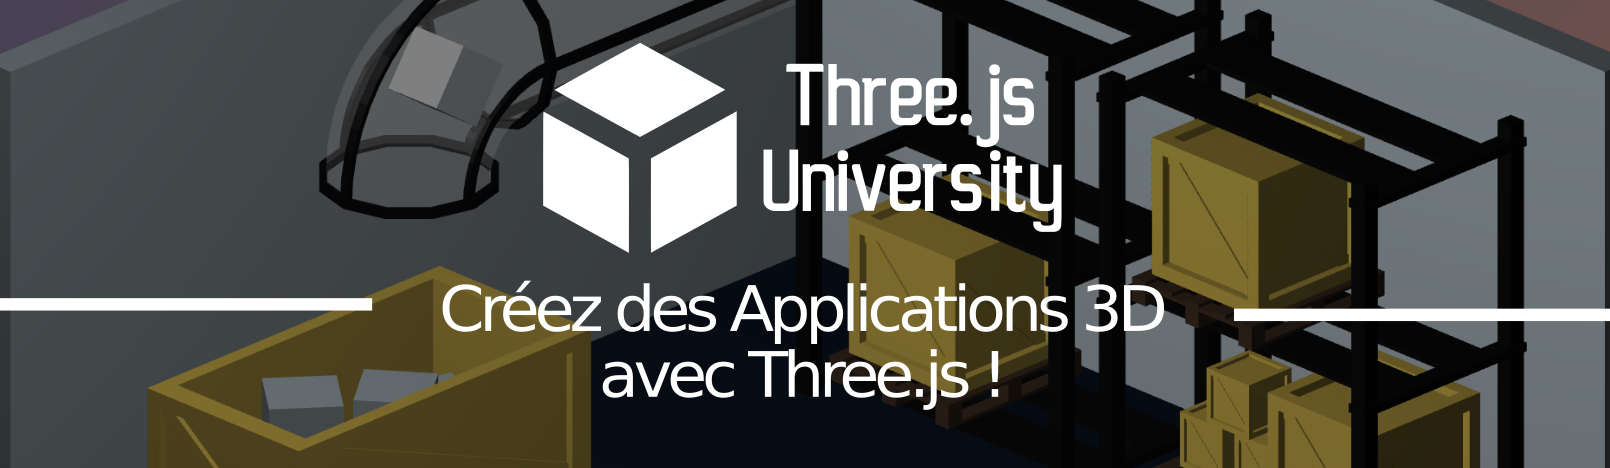 Three.js University